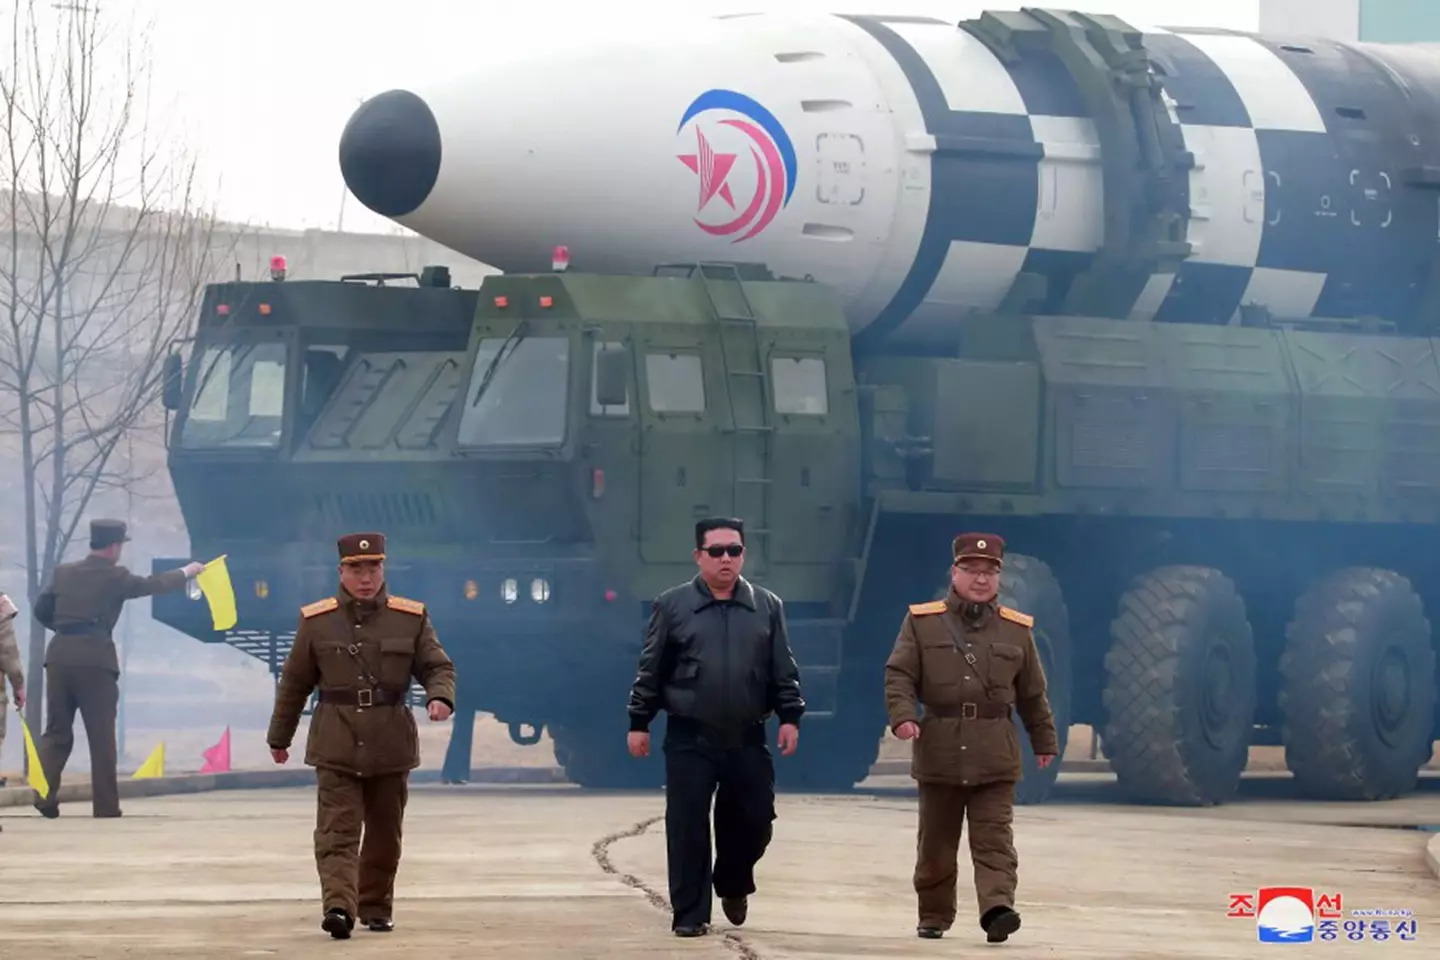 North Korean leader Kim Jong-un next to missiles,